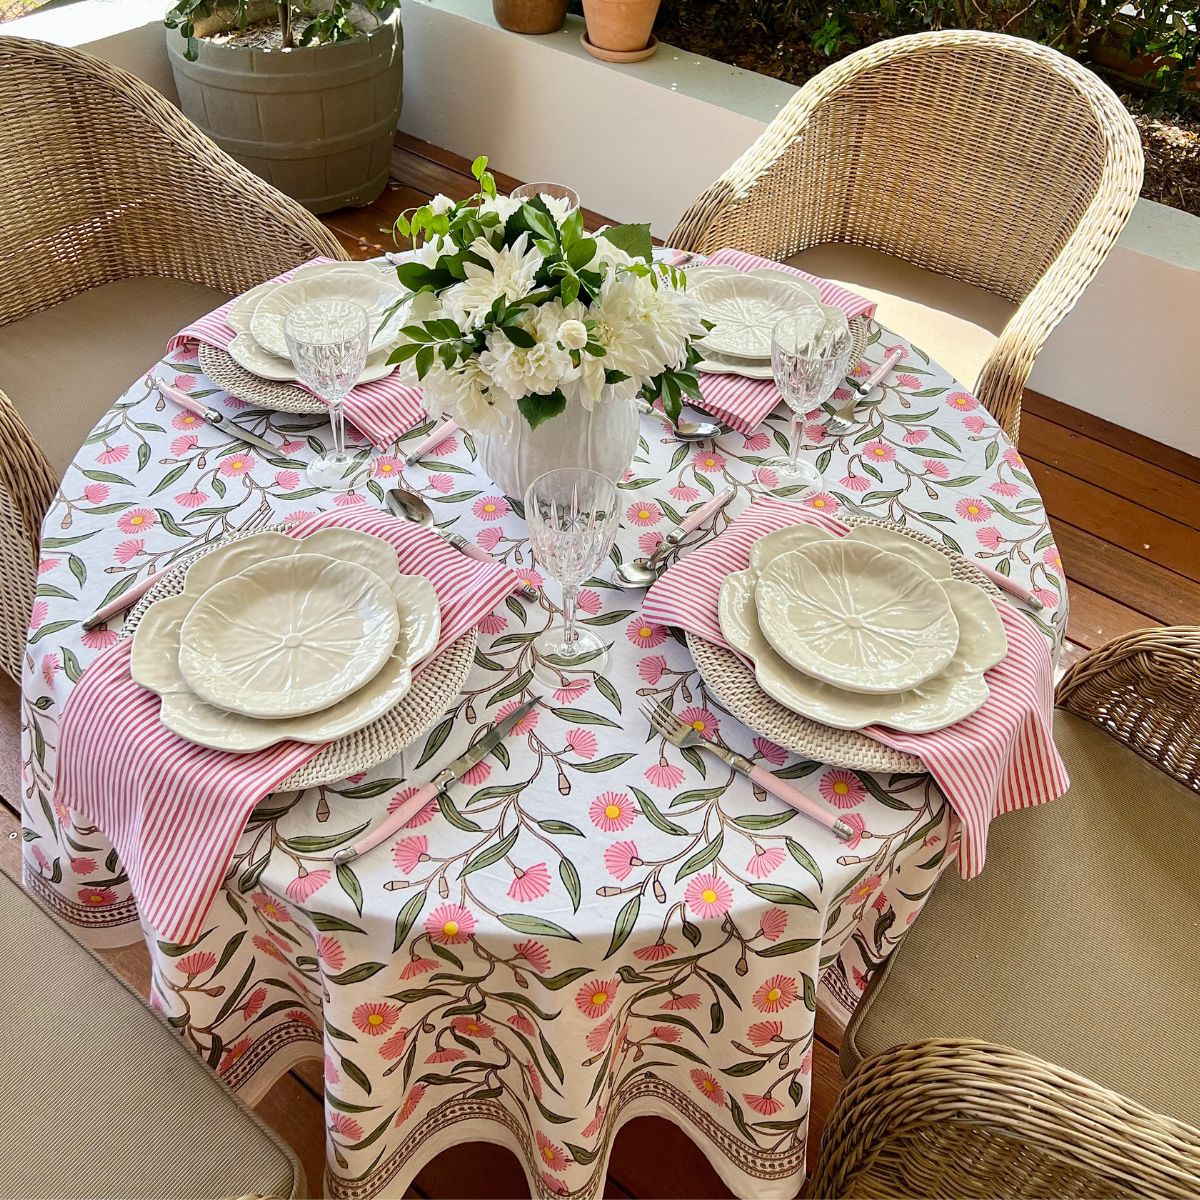 Sample Pink Flowering gums round tablecloth 180 cm ©